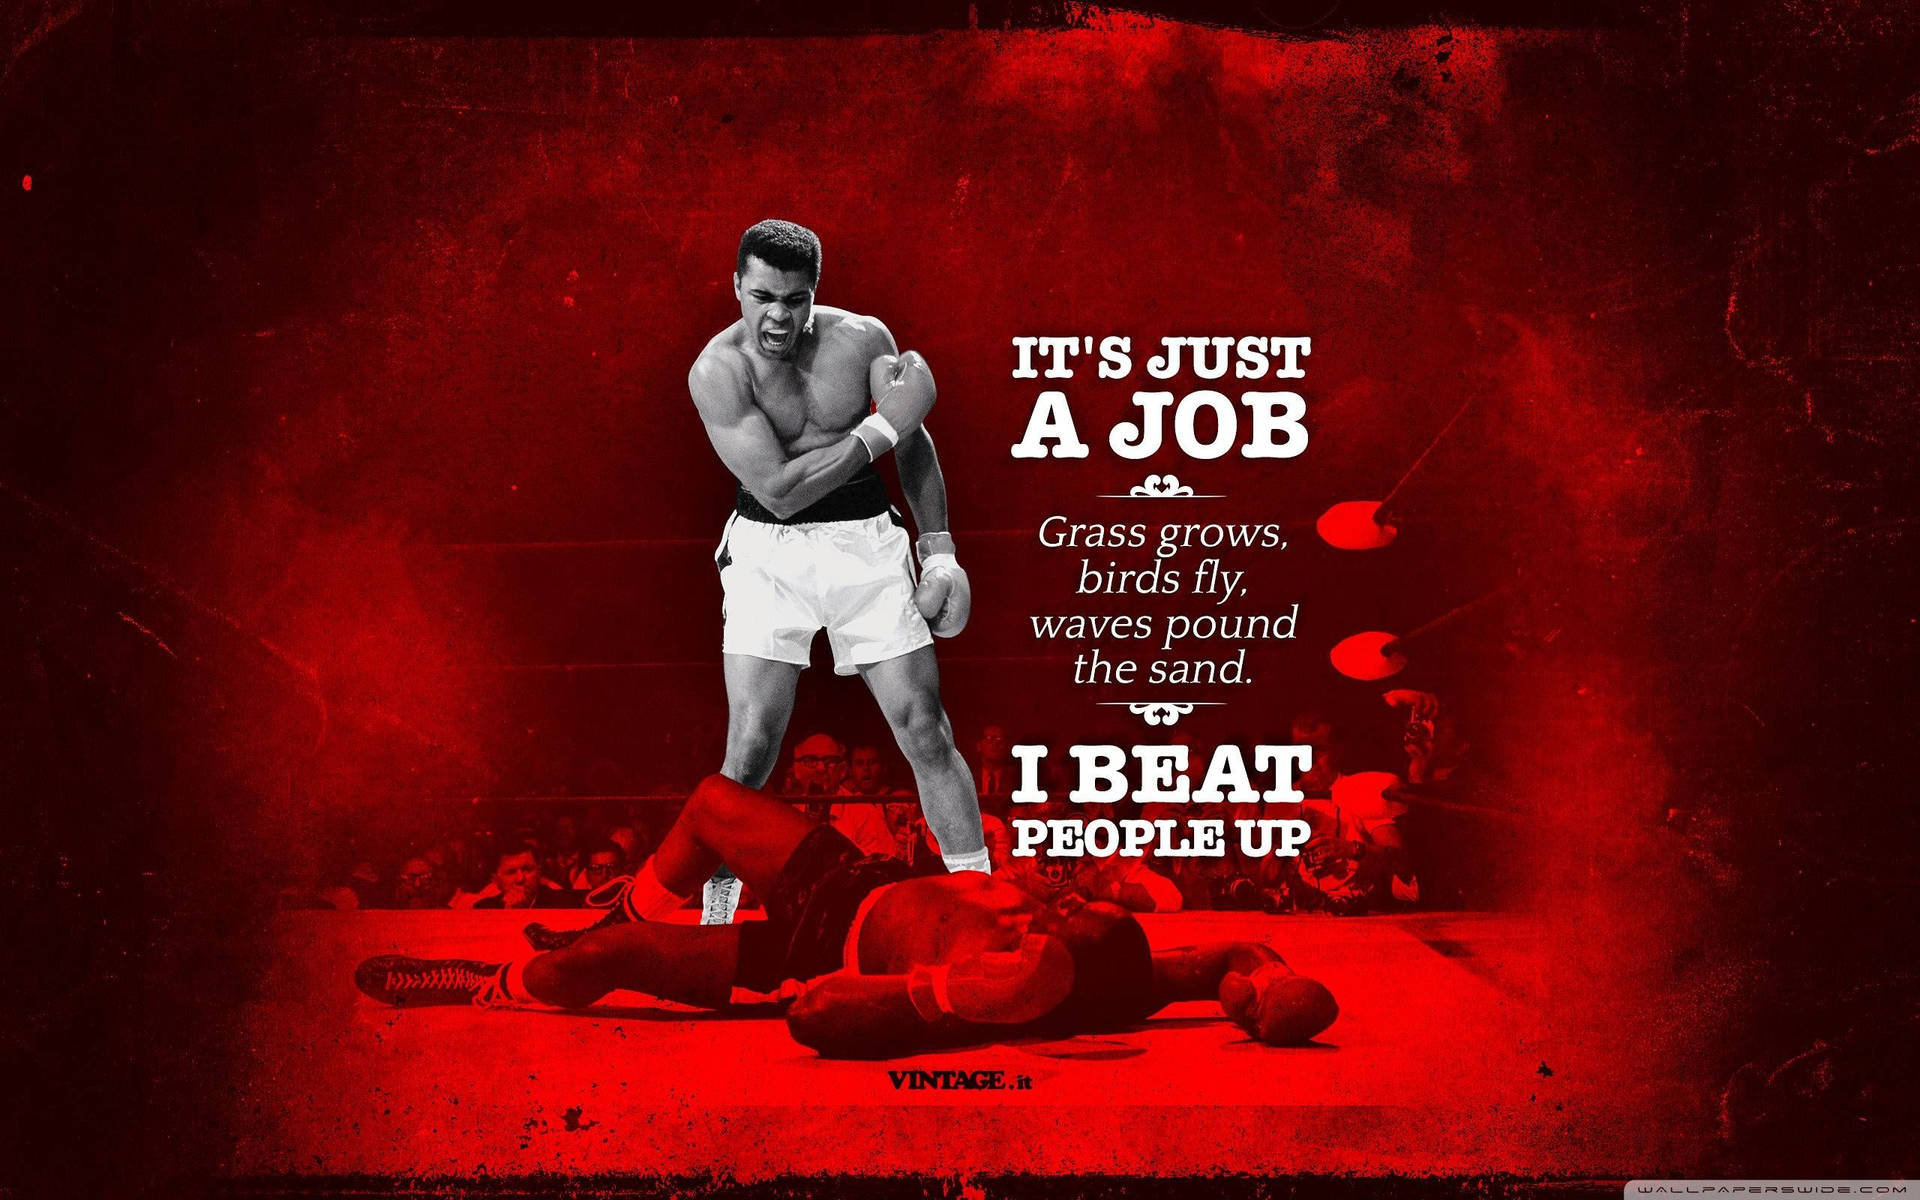 Muhammad Ali Boxing Quote Wallpaper